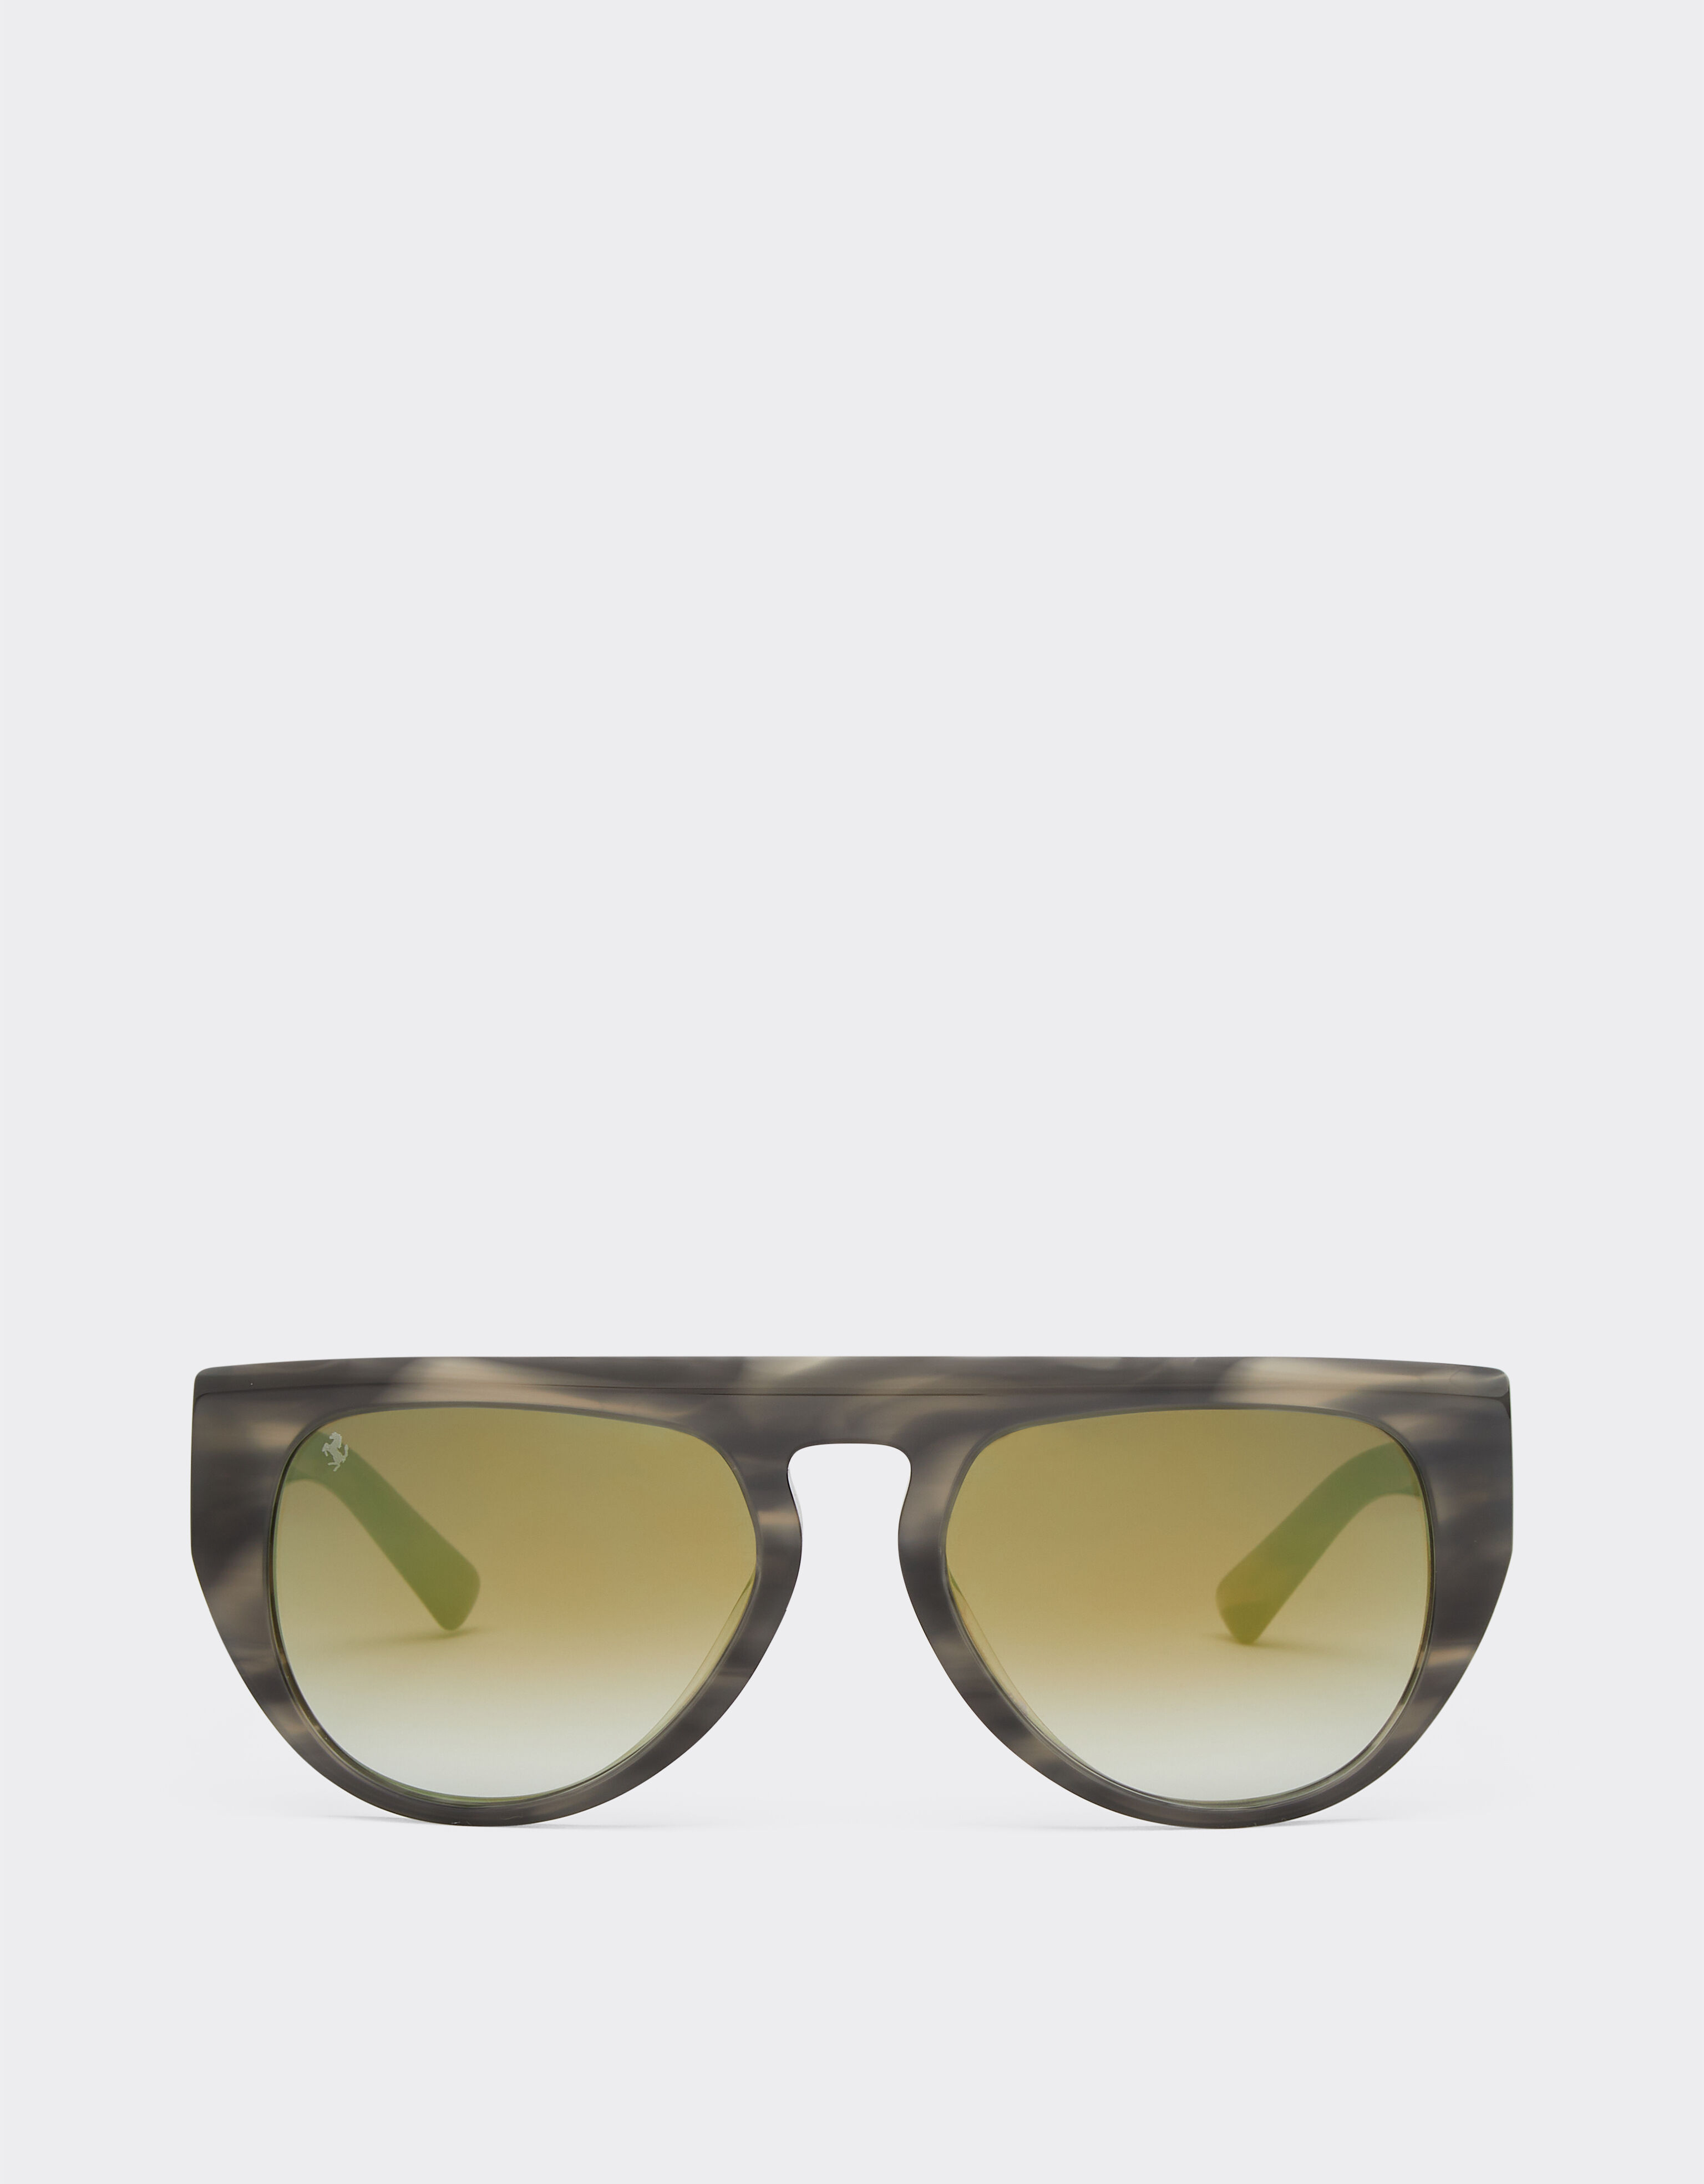 Ferrari Ferrari sunglasses in grey striped acetate with mirror lenses Black F1201f